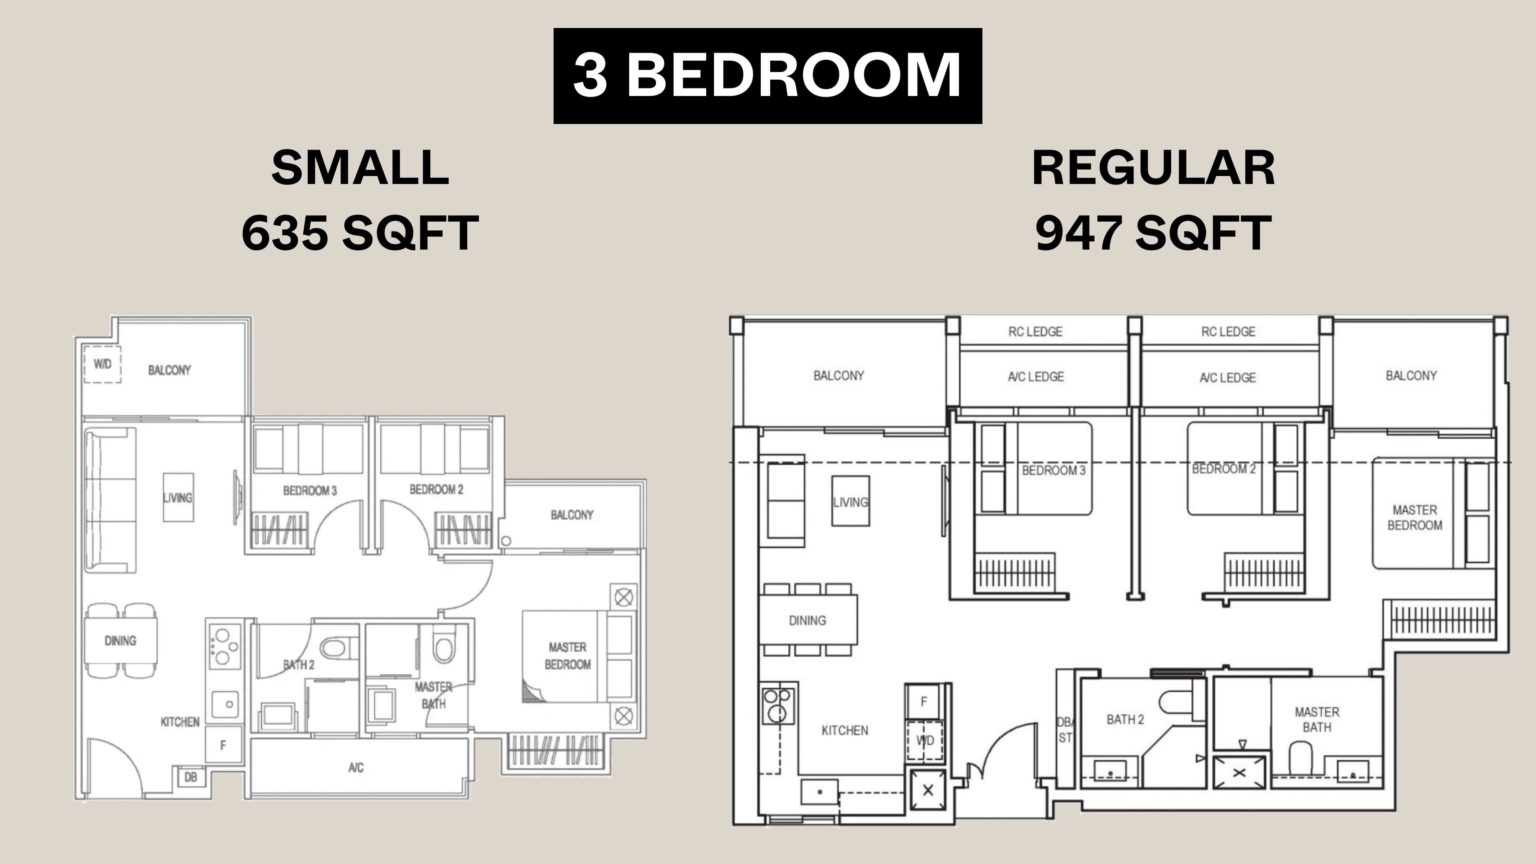 3 bedroom comparison